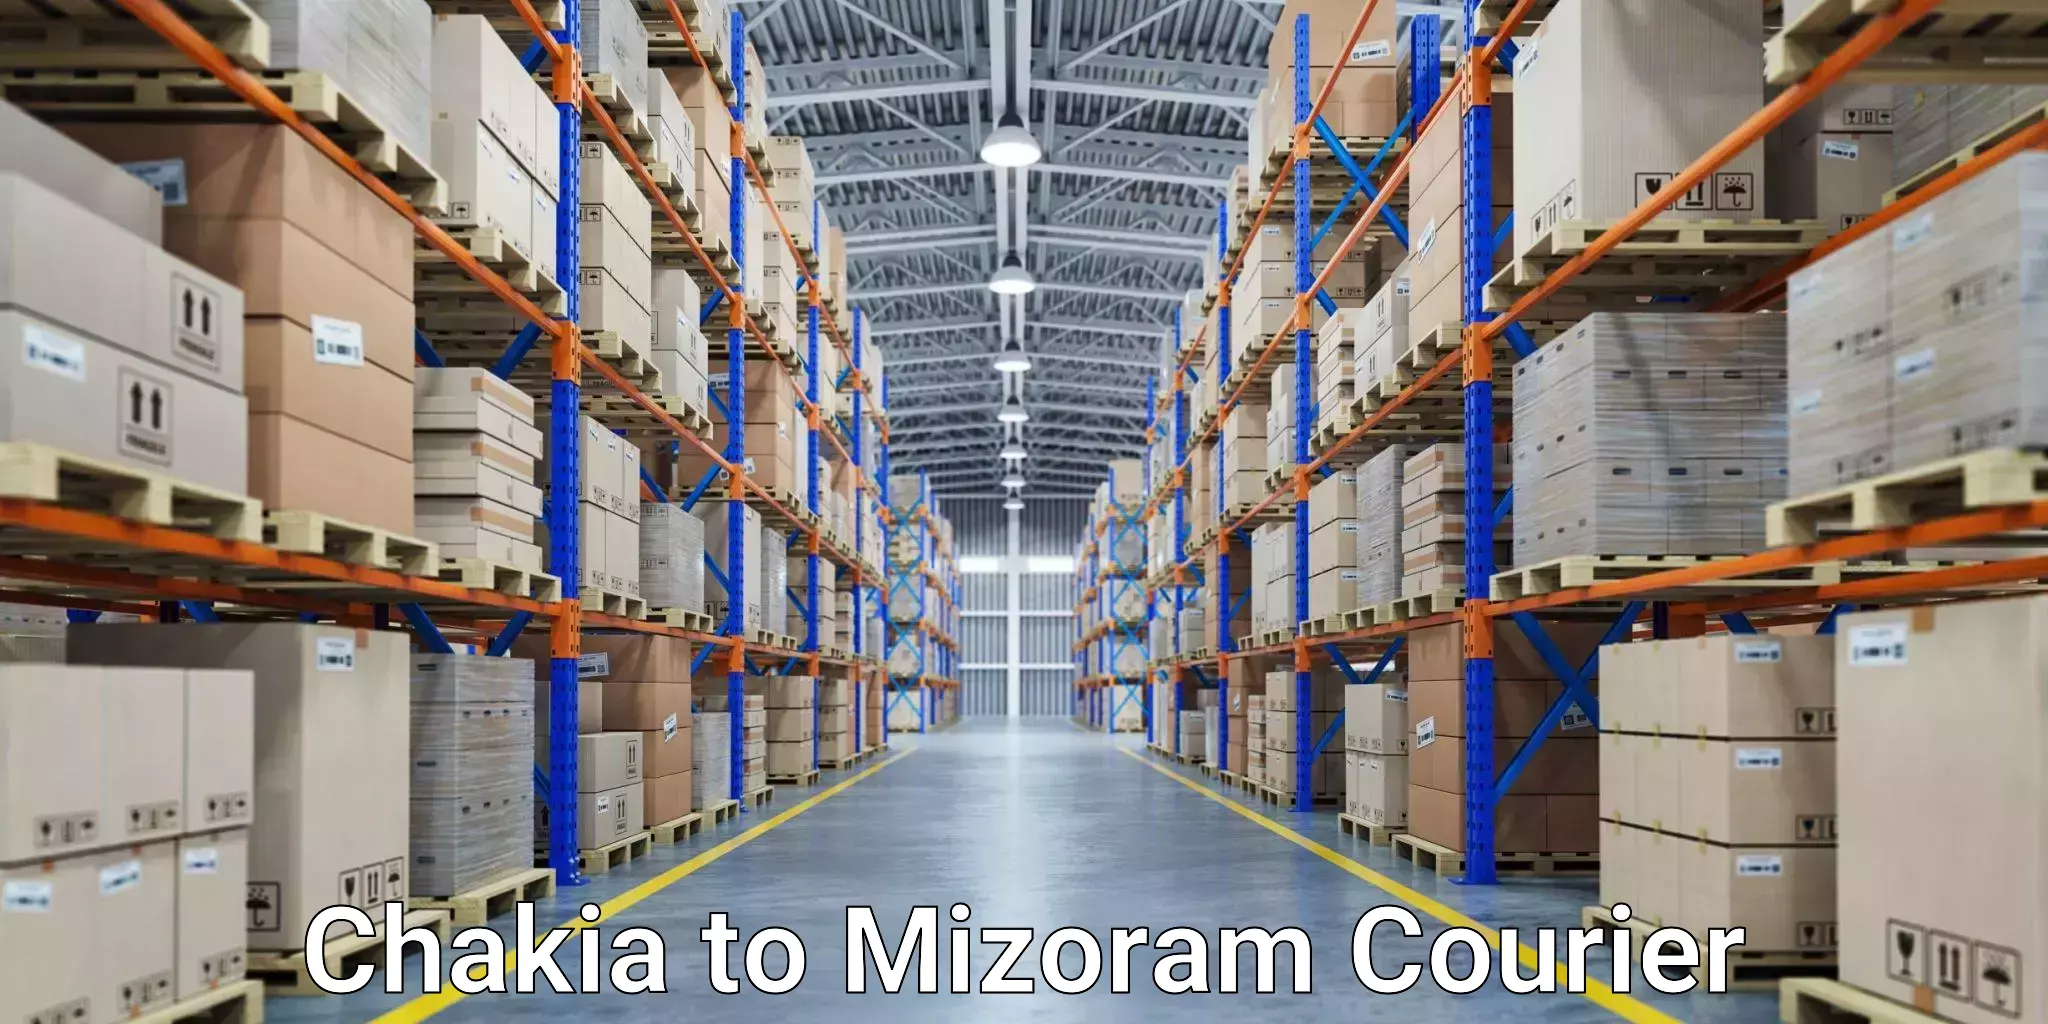 On-demand courier Chakia to Mizoram